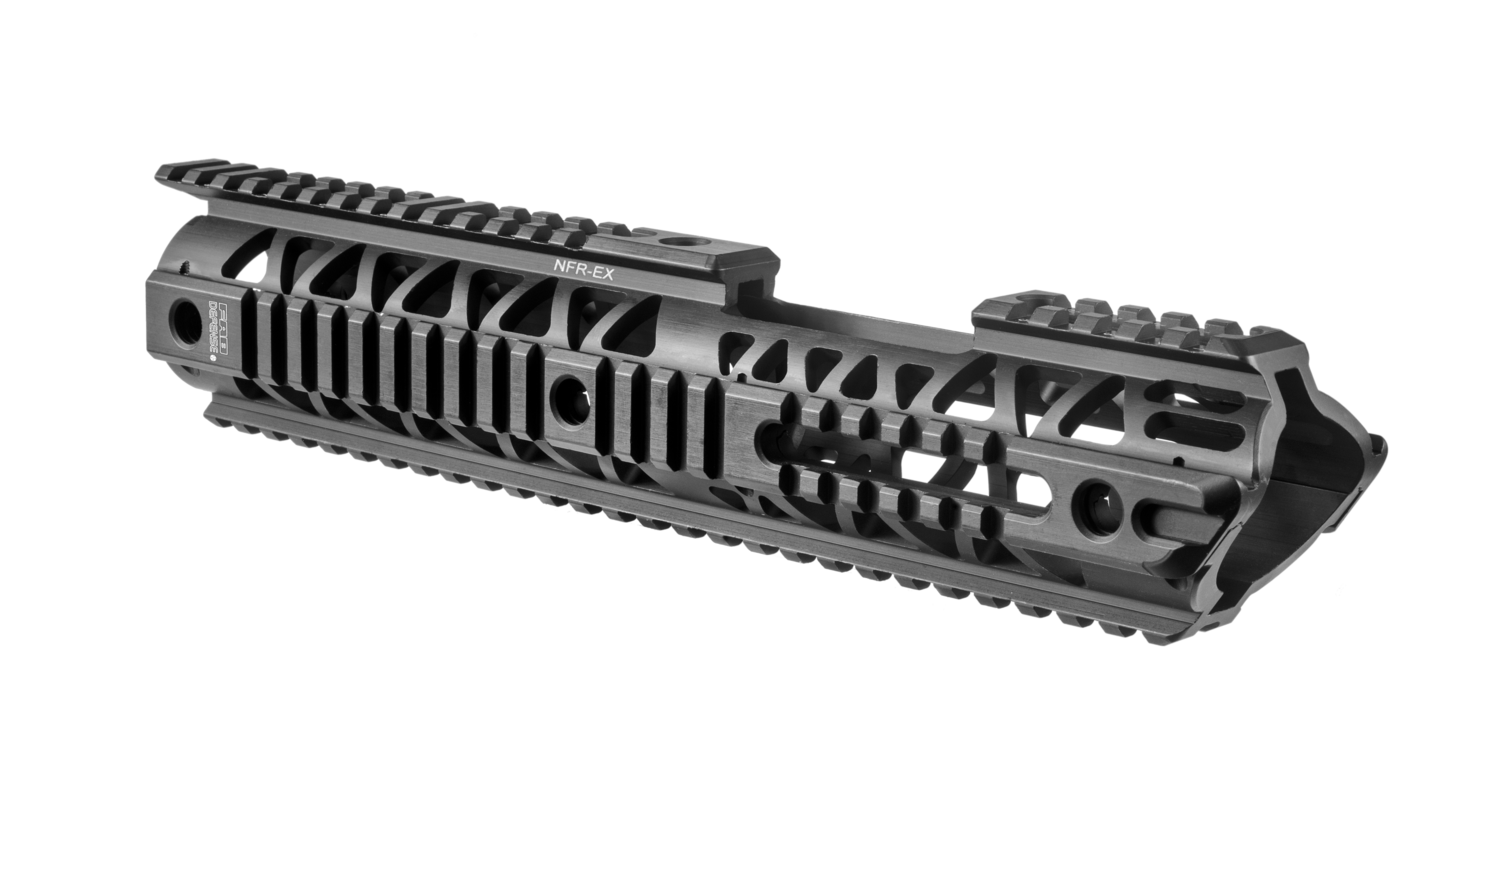 NFR-EX - Carbine Length AR 15 Extended Aluminum Quad Rail System